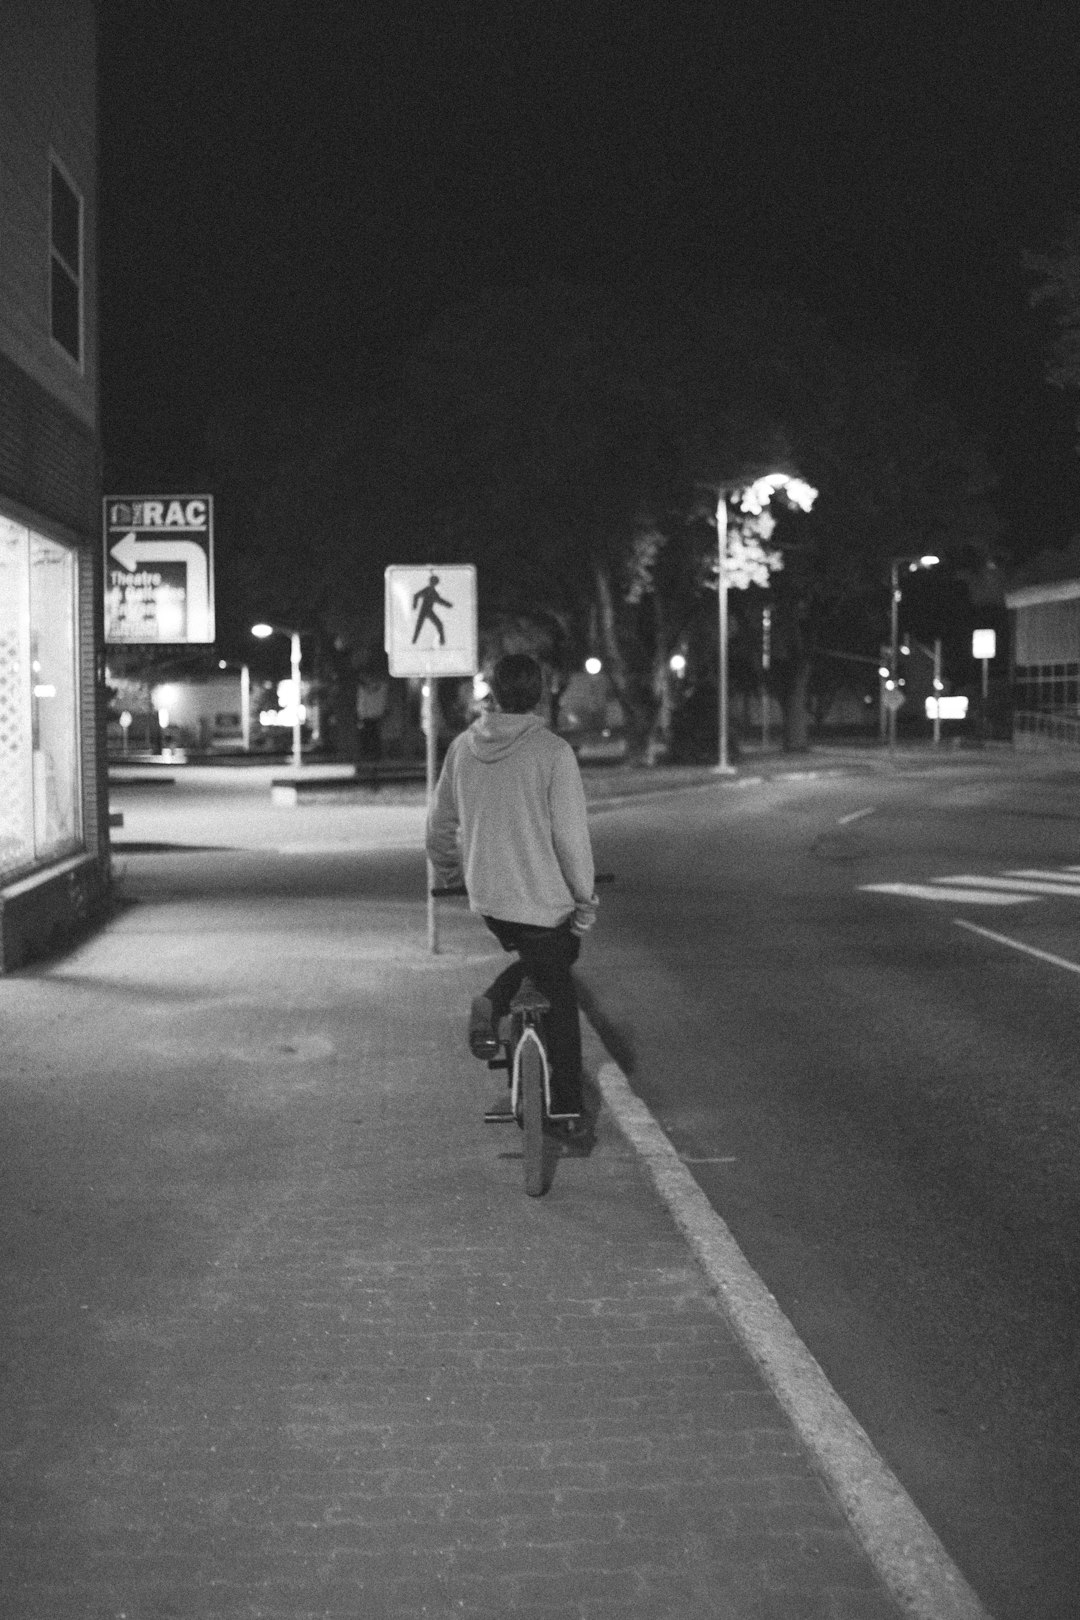 man in black jacket riding bicycle on road